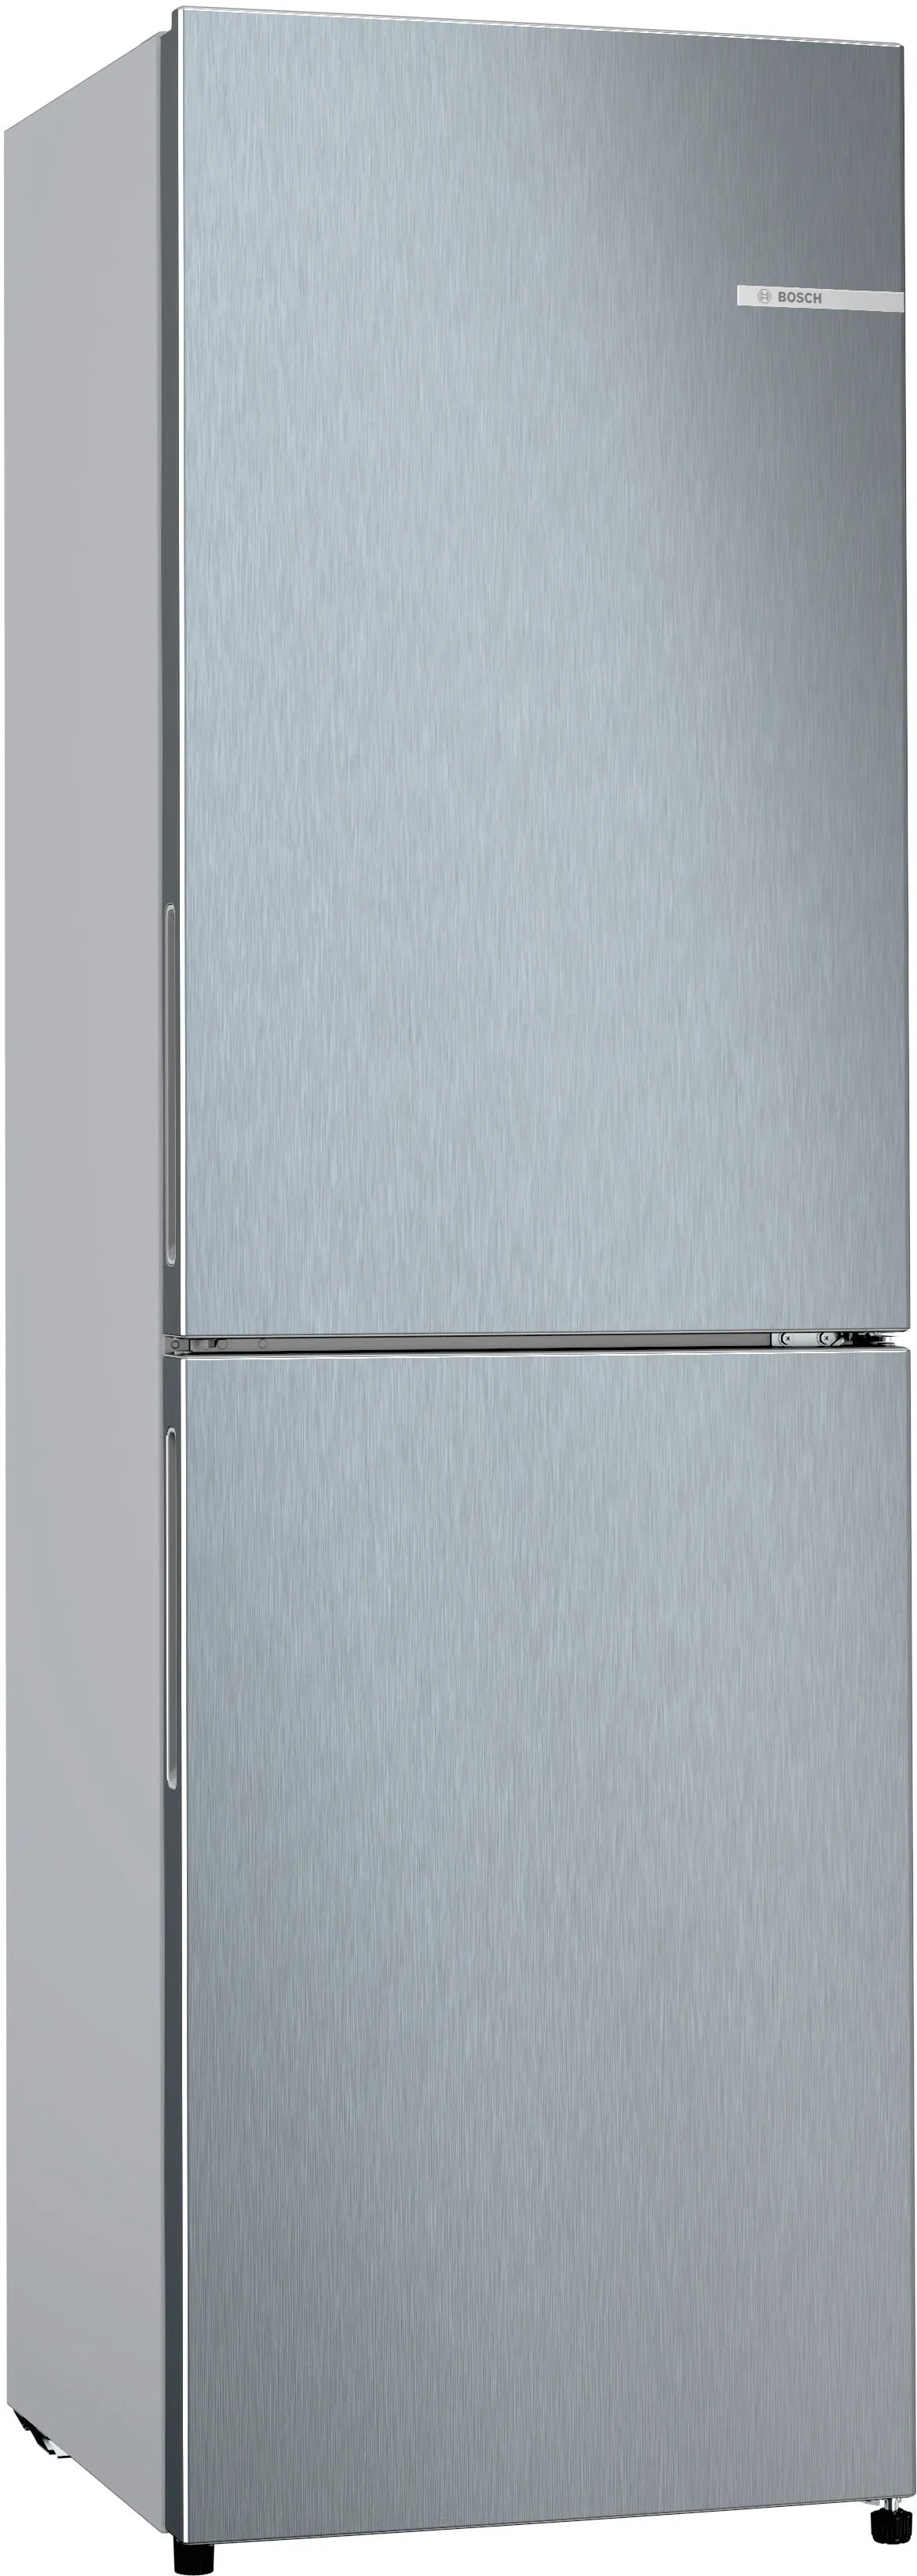 Bosch Series 2 Free Standing Fridge Freezer Stainless Steel | KGN27NLEAG